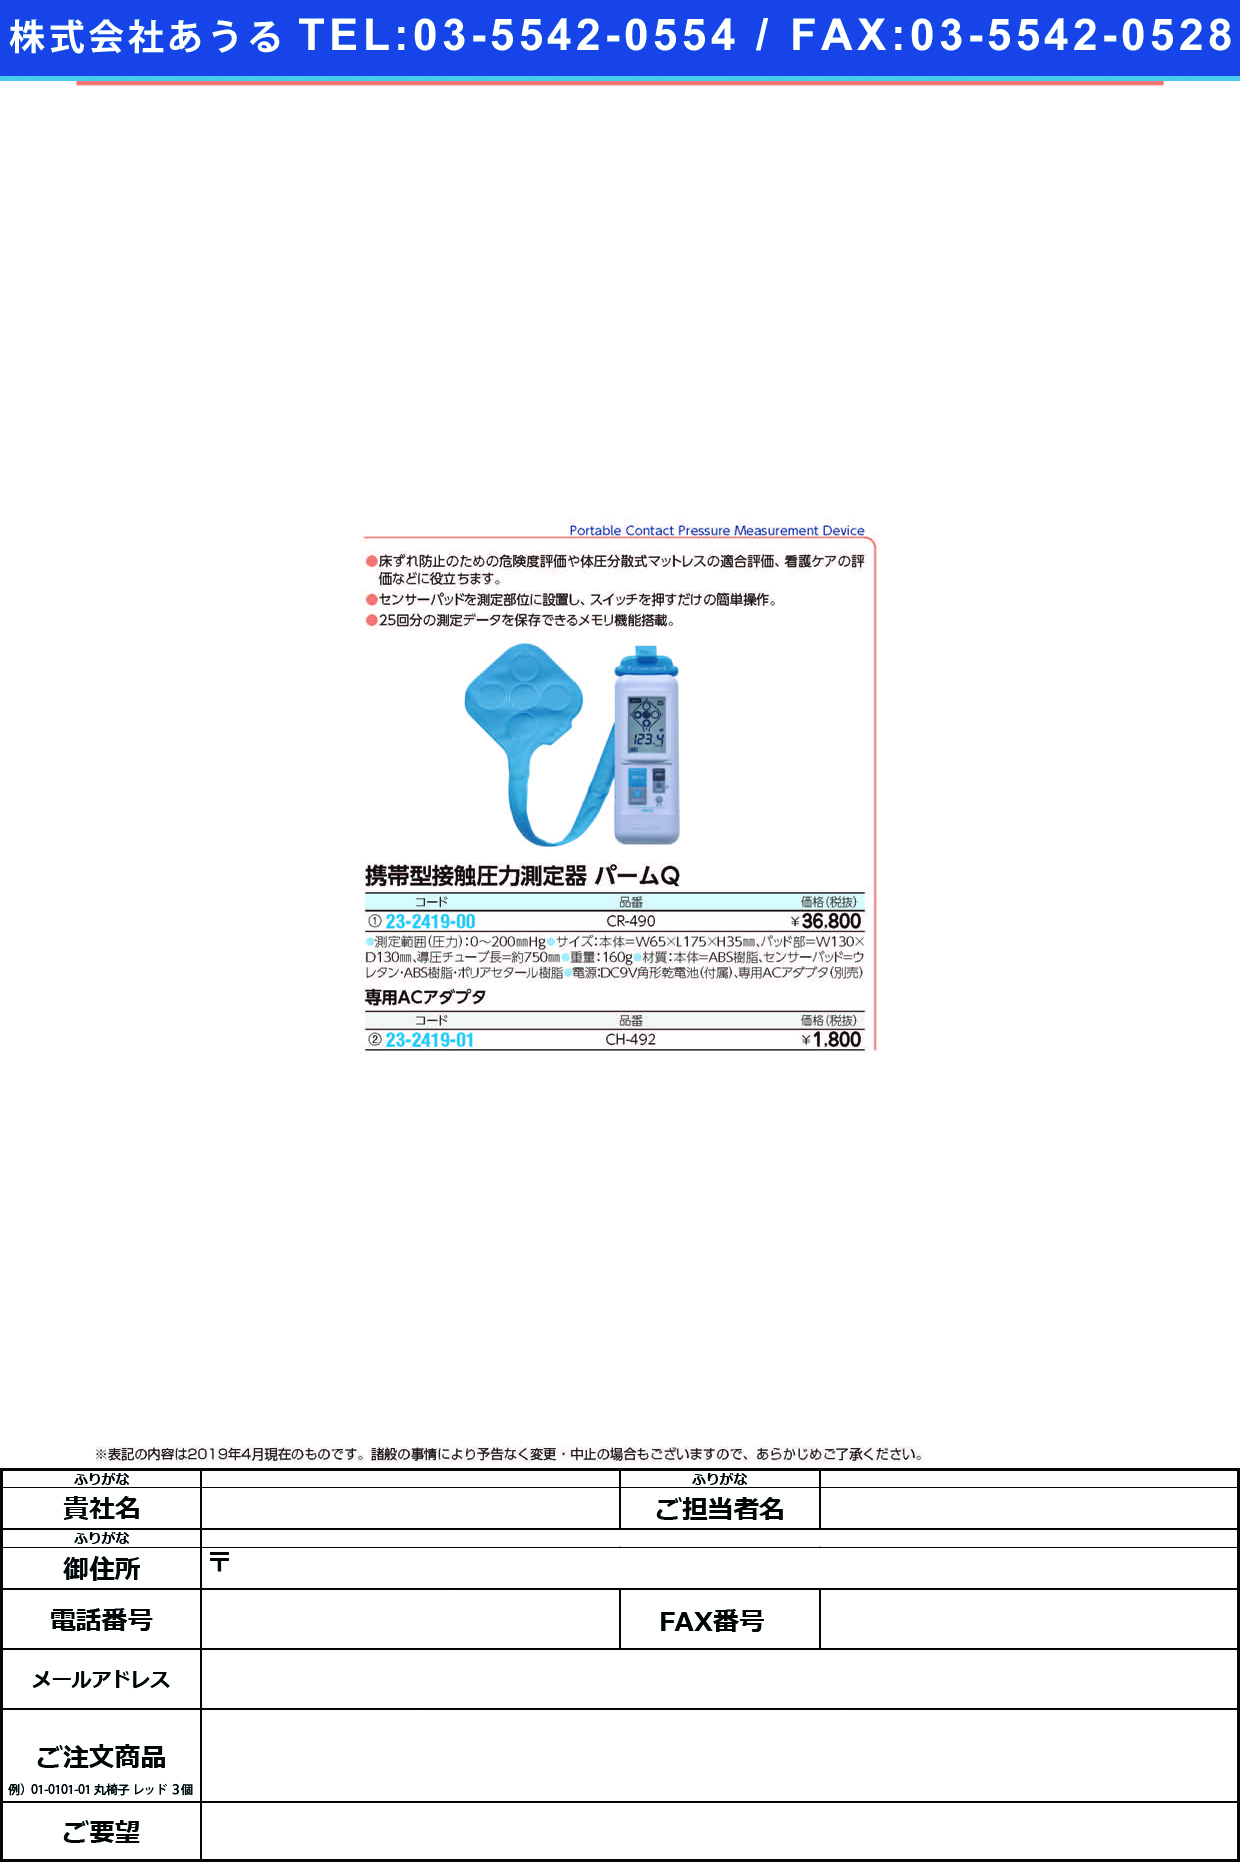 (23-2419-00)携帯型接触圧力測定器パームＱ CR-490 ｱﾂﾘｮｿｸﾃｲｷﾊﾟｰﾑQ(ケープ)【1台単位】【2019年カタログ商品】